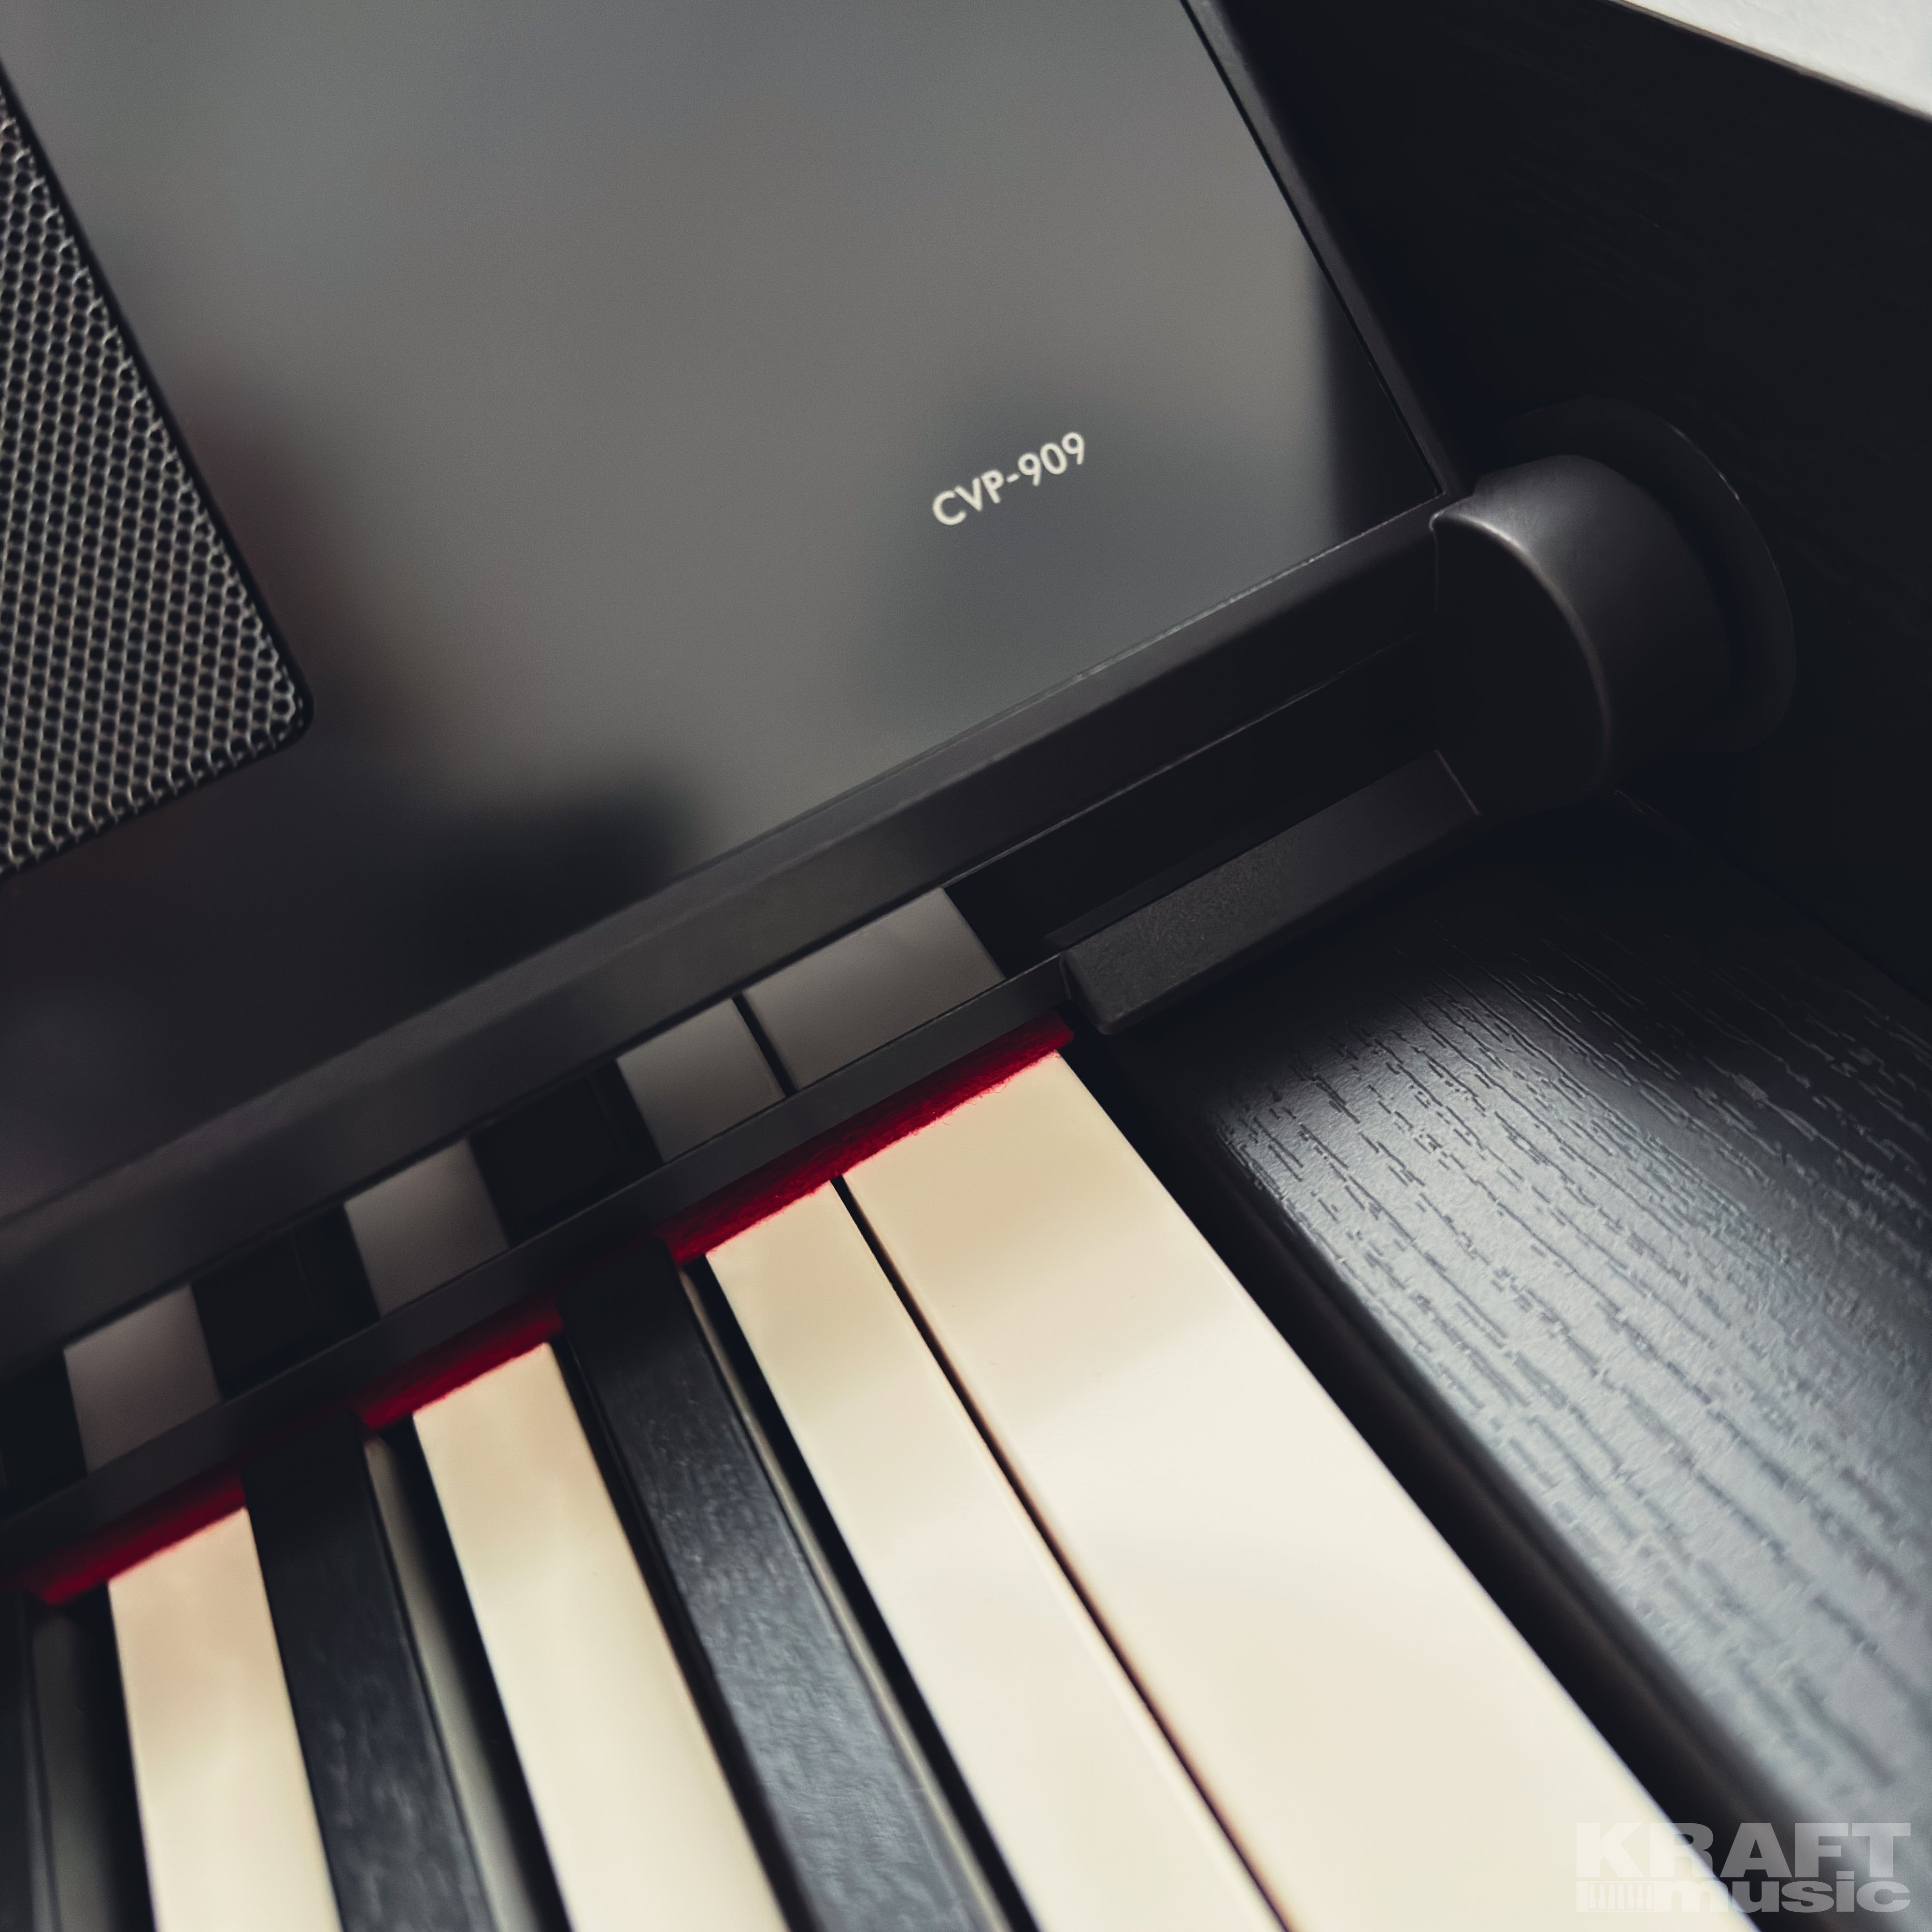 Yamaha Clavinova CVP-909 Digital Piano - Matte Black